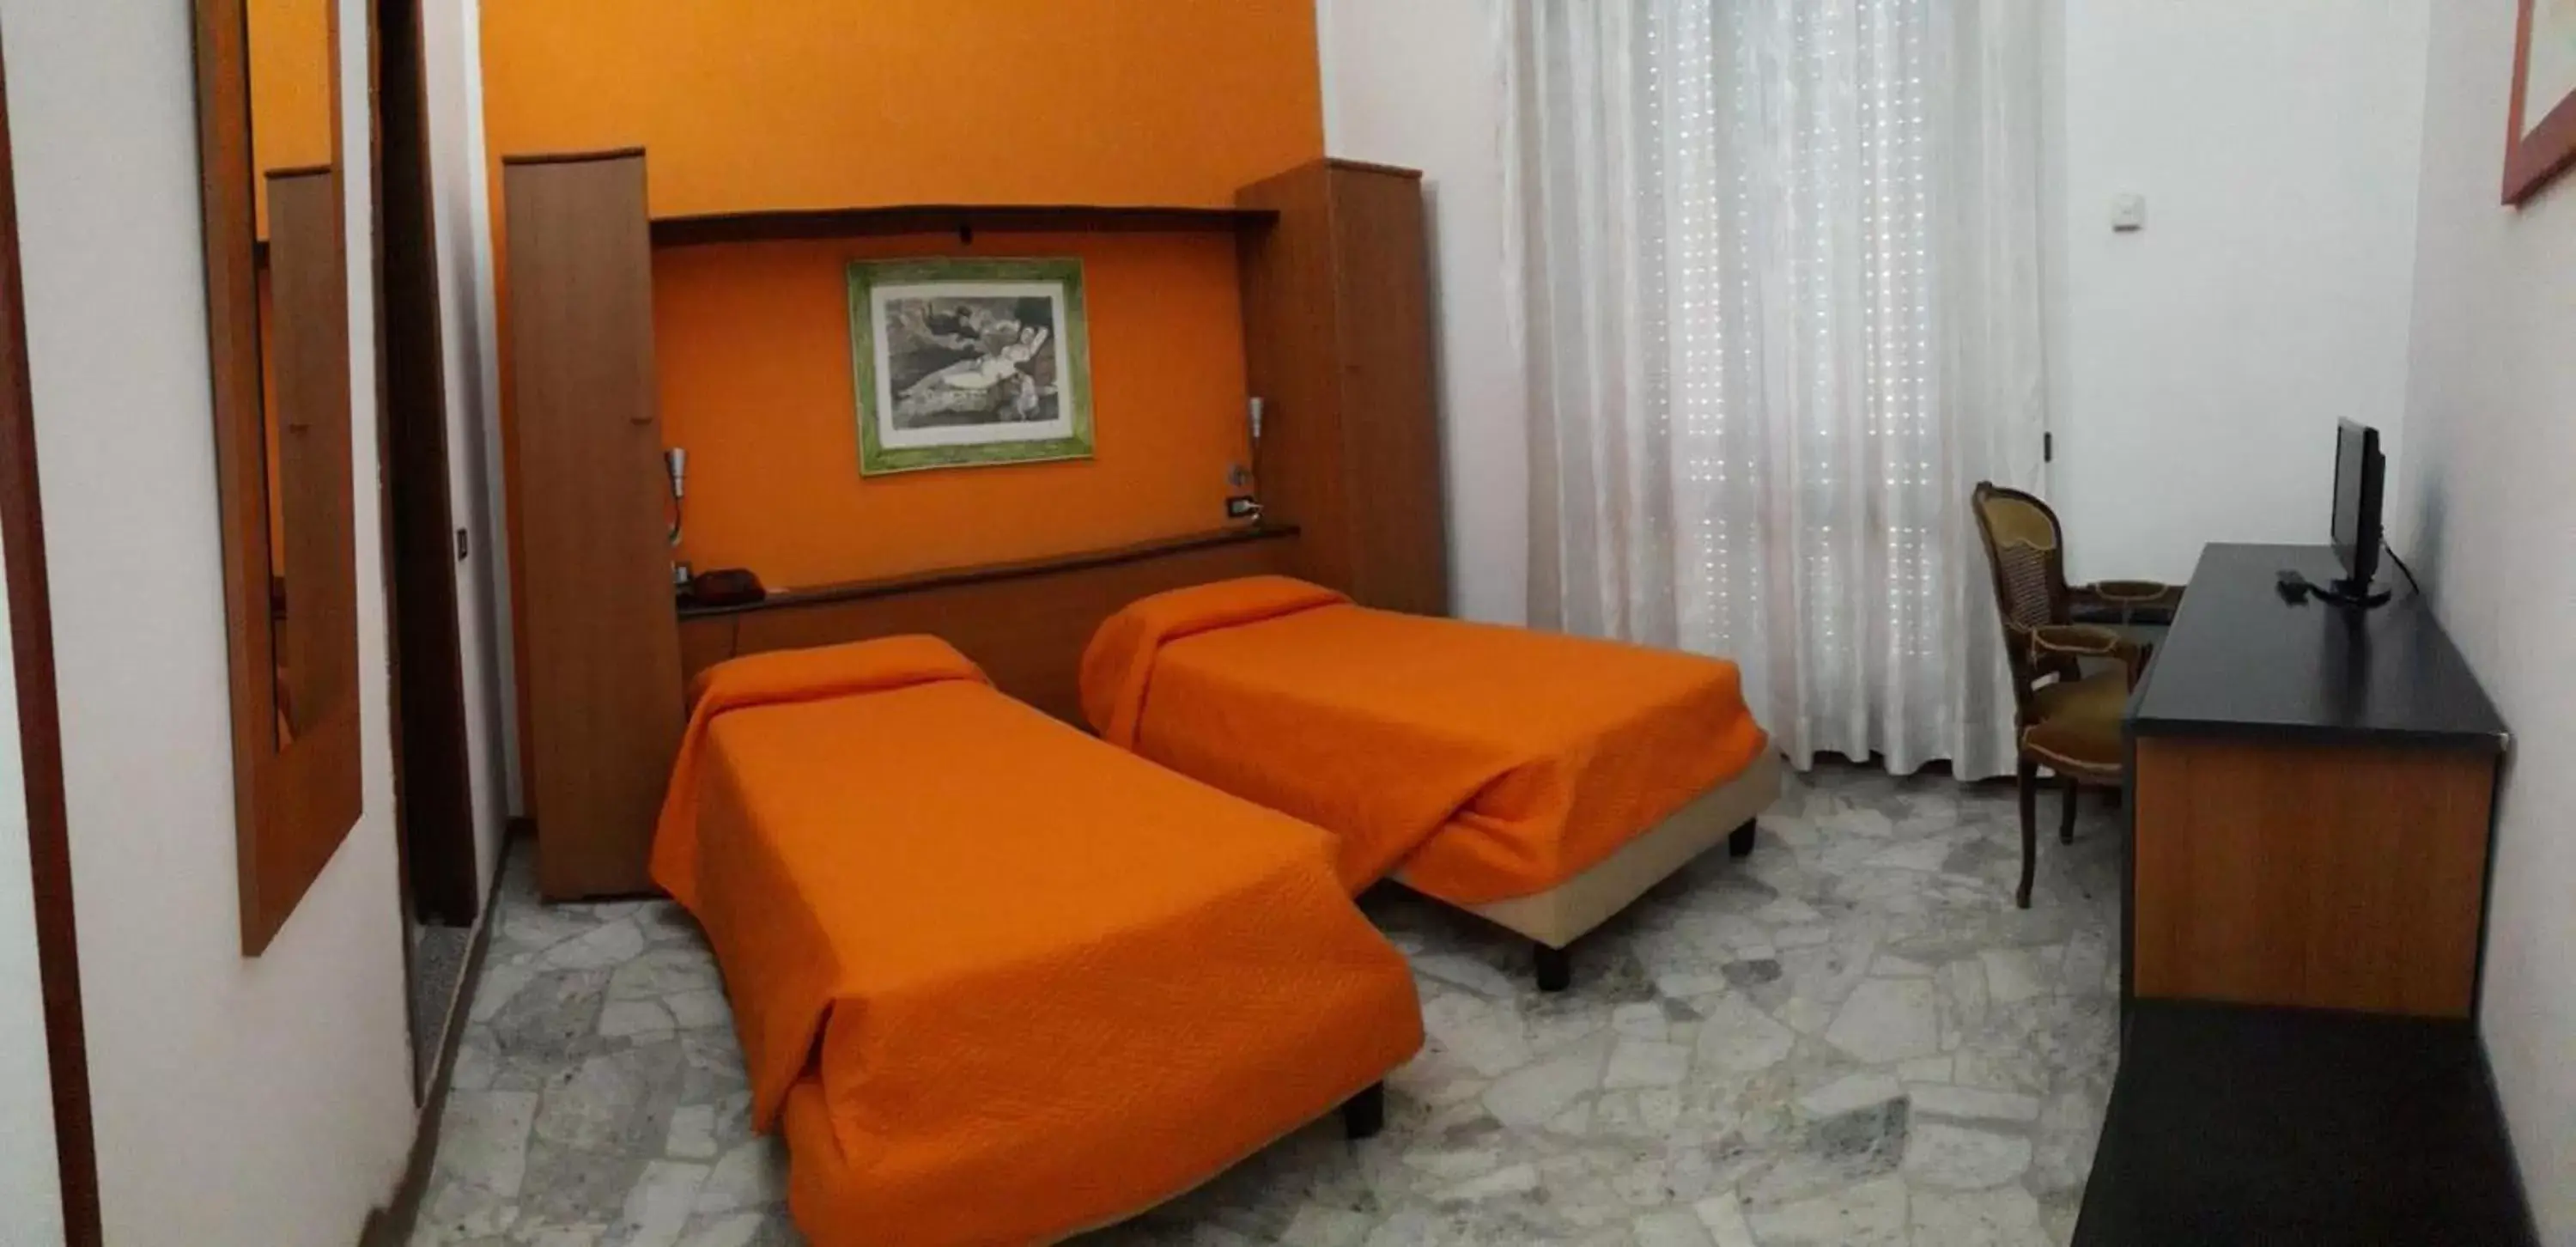 Bedroom in Aer Hotel Malpensa